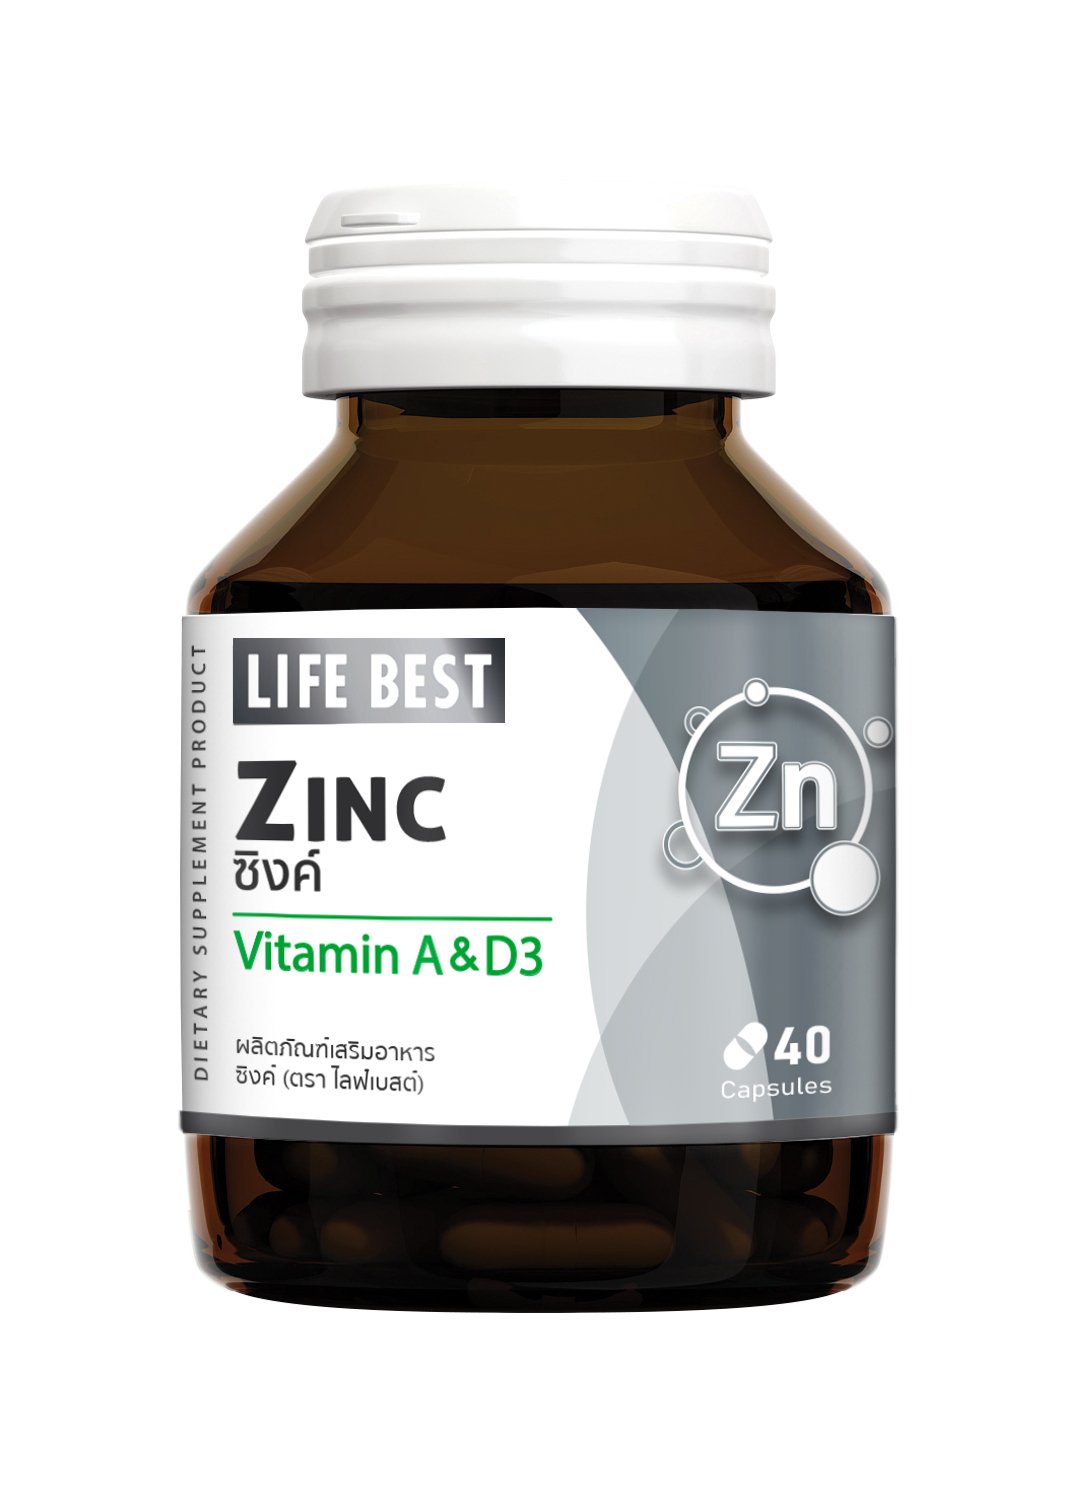 Life Best  Zinc Plus Vitamin A,D3 ไลฟ์เบสต์ ซิงค์ พลัส วิตามิน เอ,ดีสาม (40 แคปซูล)